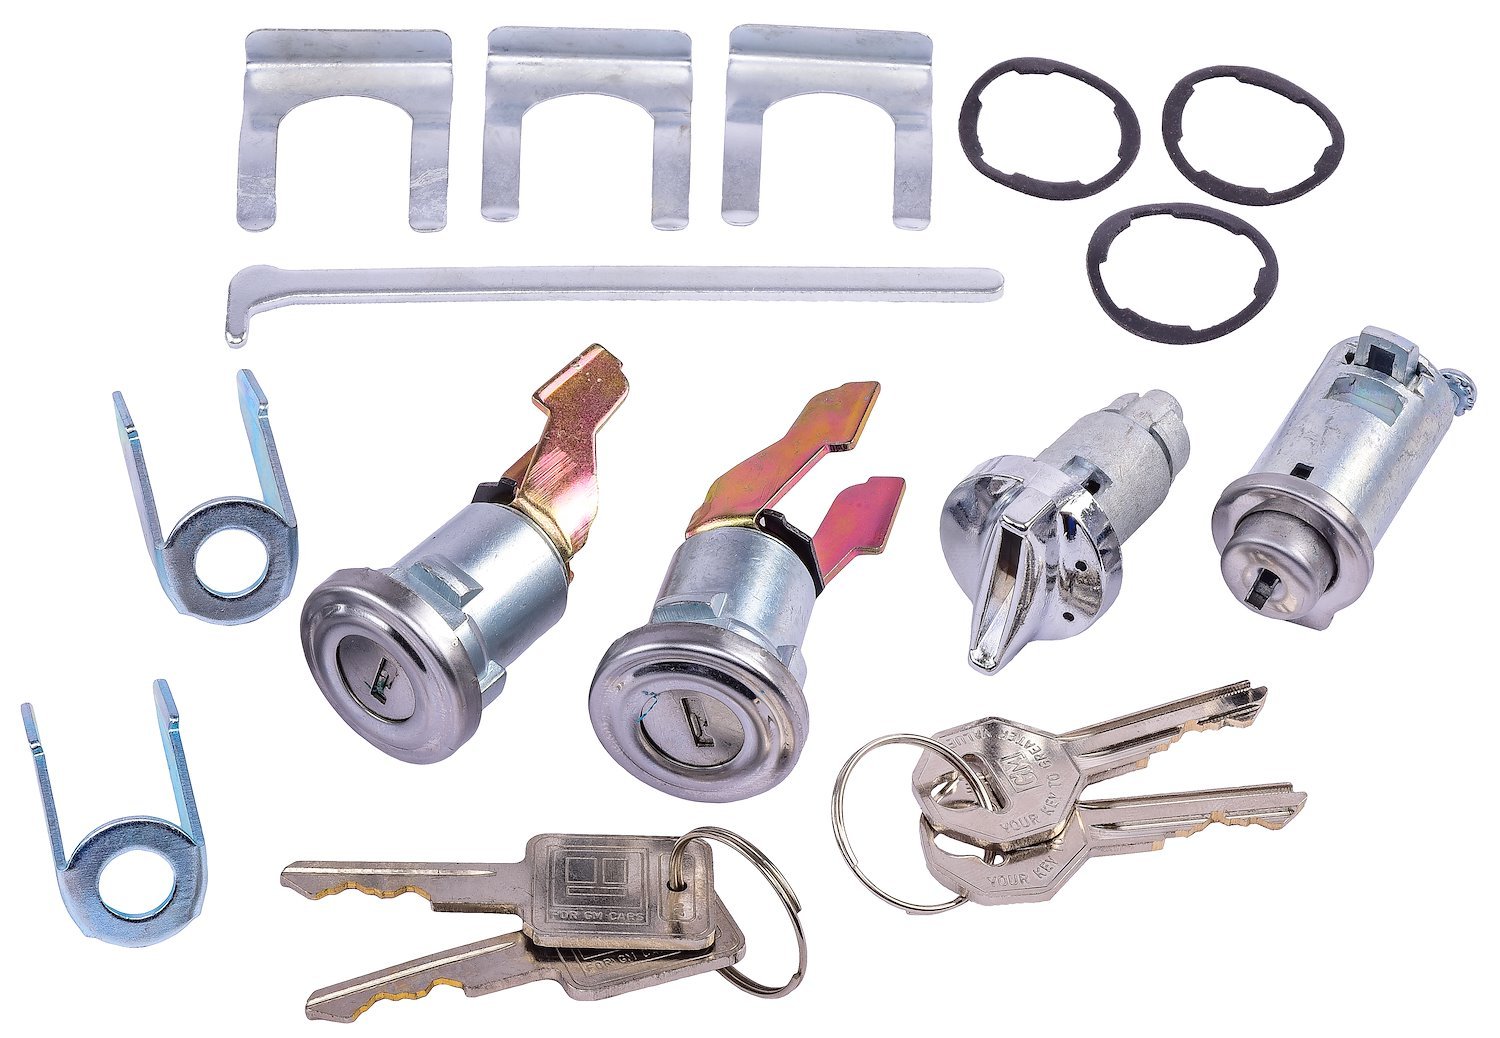 Ignition, Door & Glovebox Lock Set Fits Select 1955, 1957 Chevrolet Wagon Models [Original Octagon Keys]